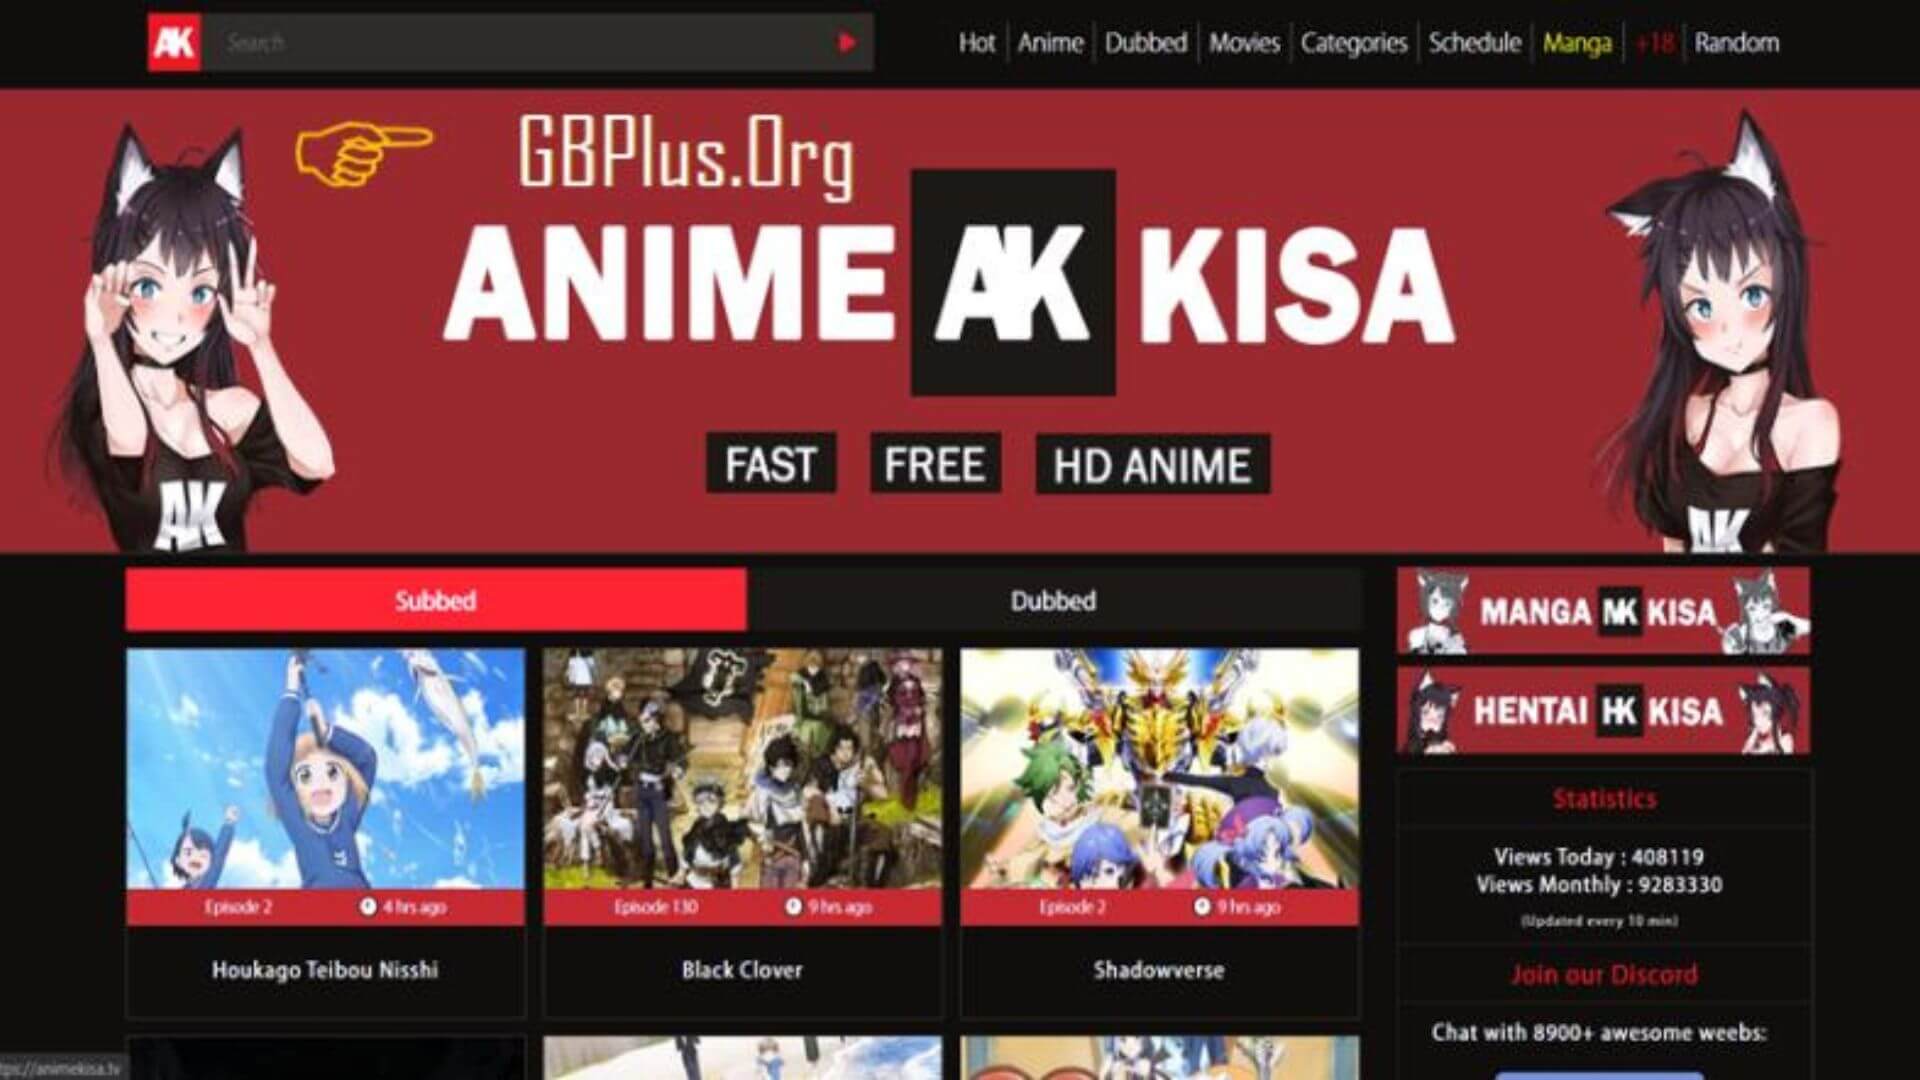 Animekisa.tv | Watch Online animes with English subtitle